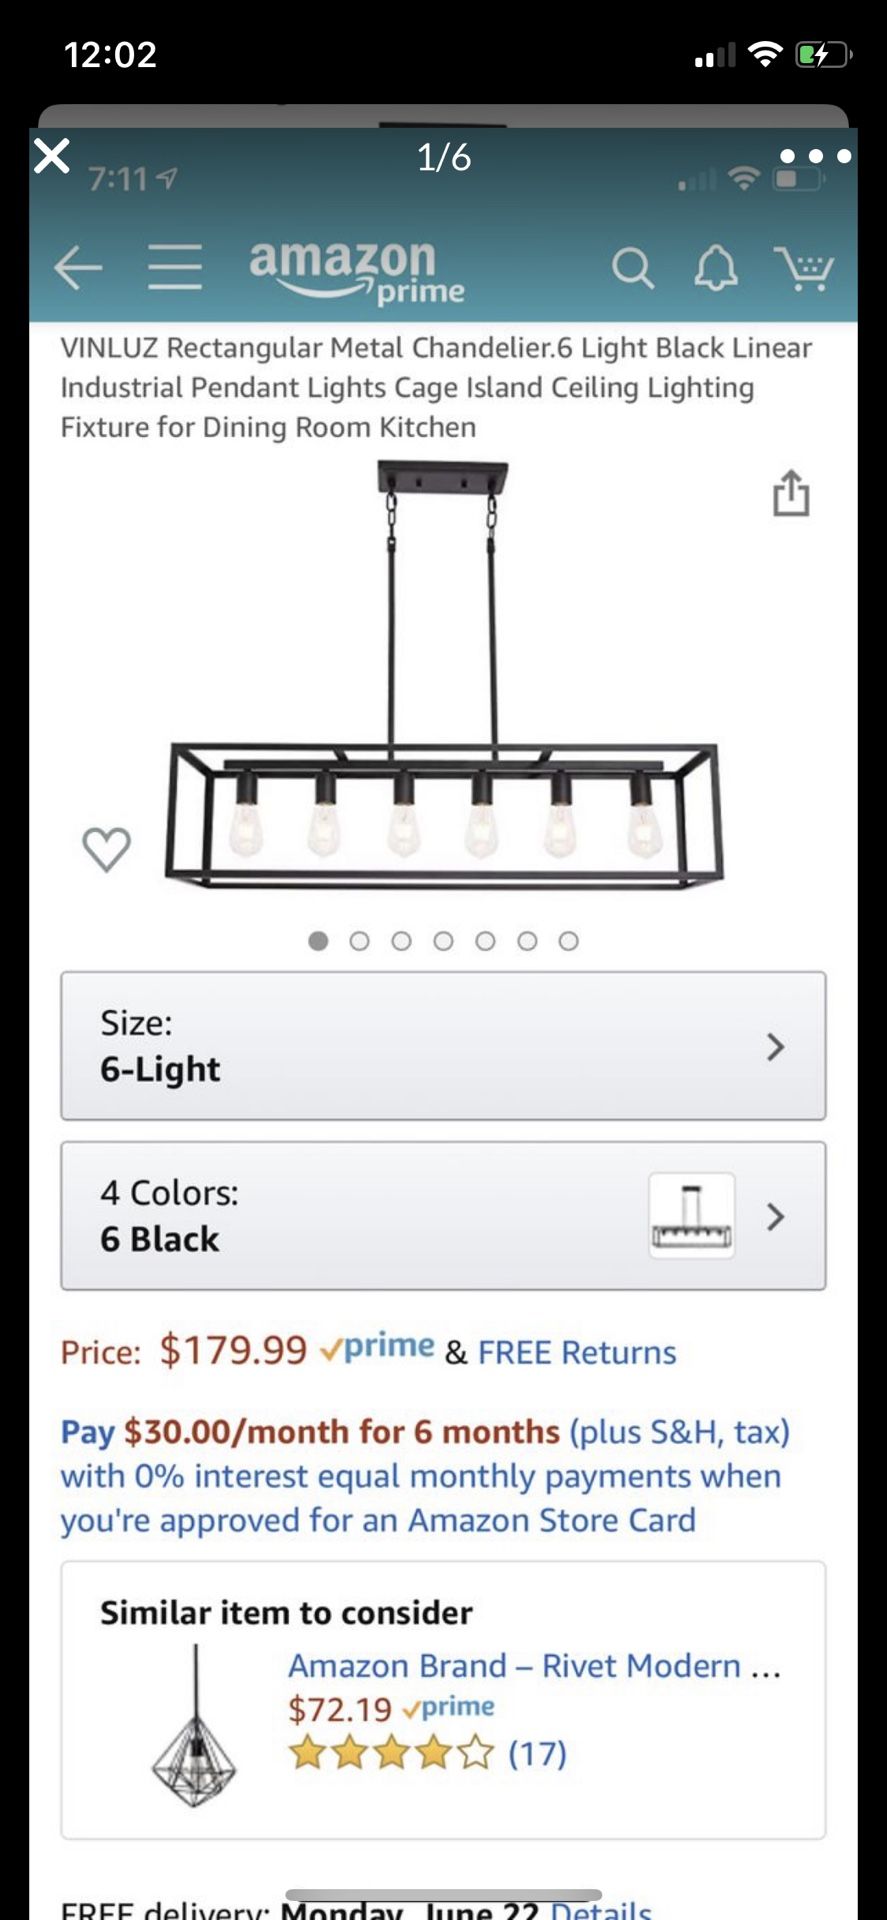 VINLUZ Rectangular Metal Chandelier.6 Light Black Linear Industrial Pendant Lights Cage Island Ceiling Lighting Fixture for Dining Room Kitchen